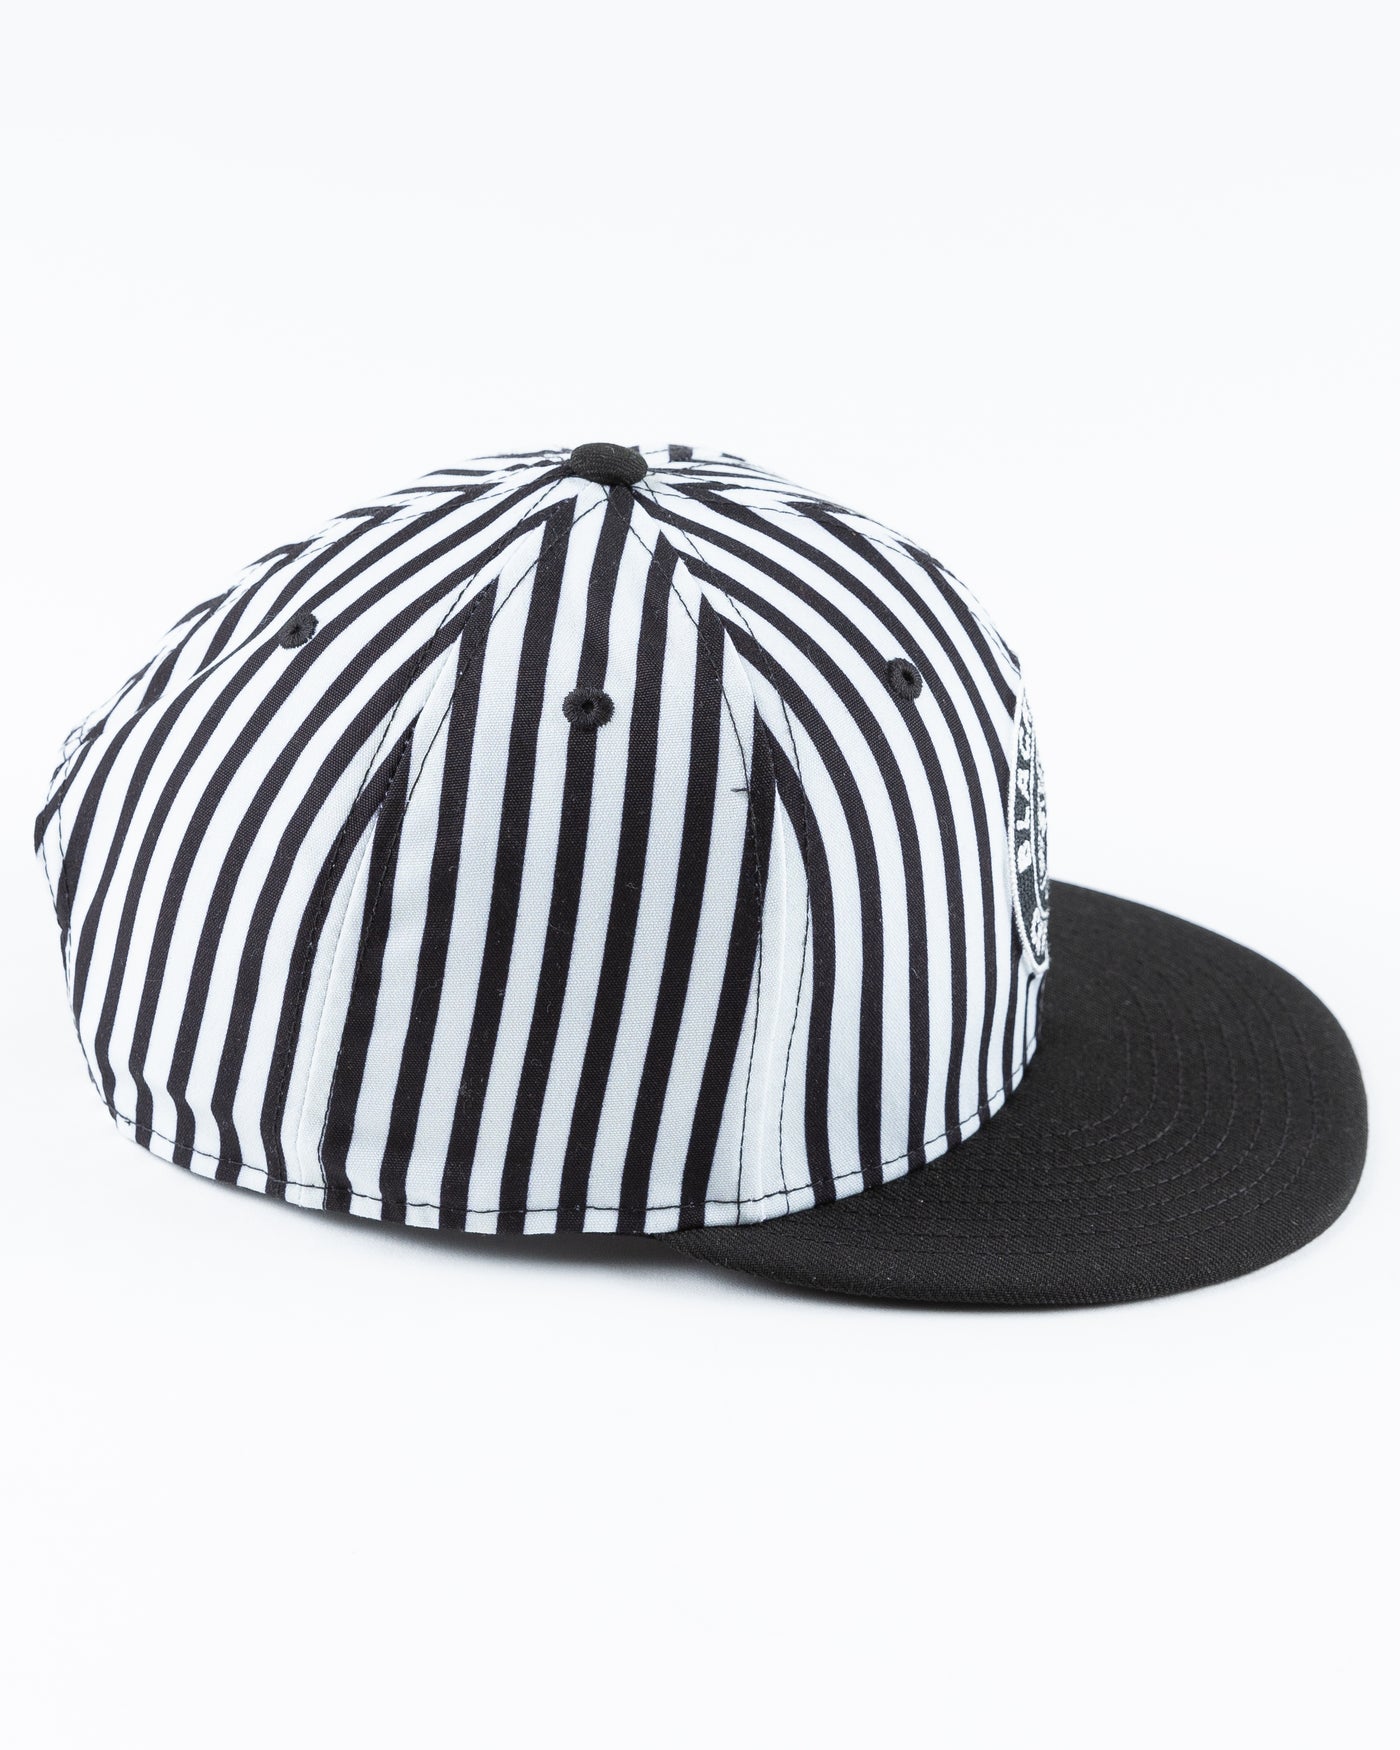 black and white zebra printed New Era snapback cap with tonal Chicago Blackhawks logo on front - right side lay flat